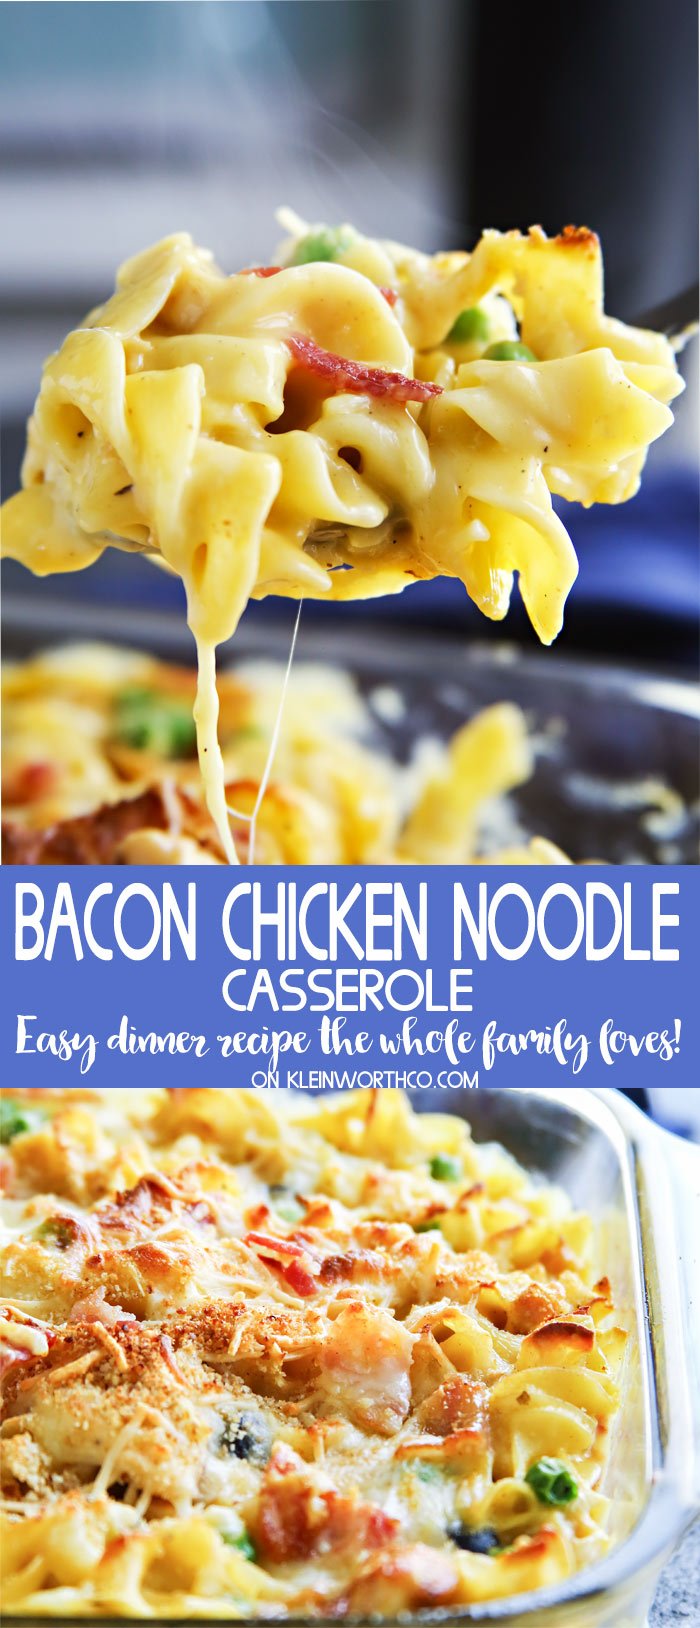 Bacon Chicken Noodle Casserole